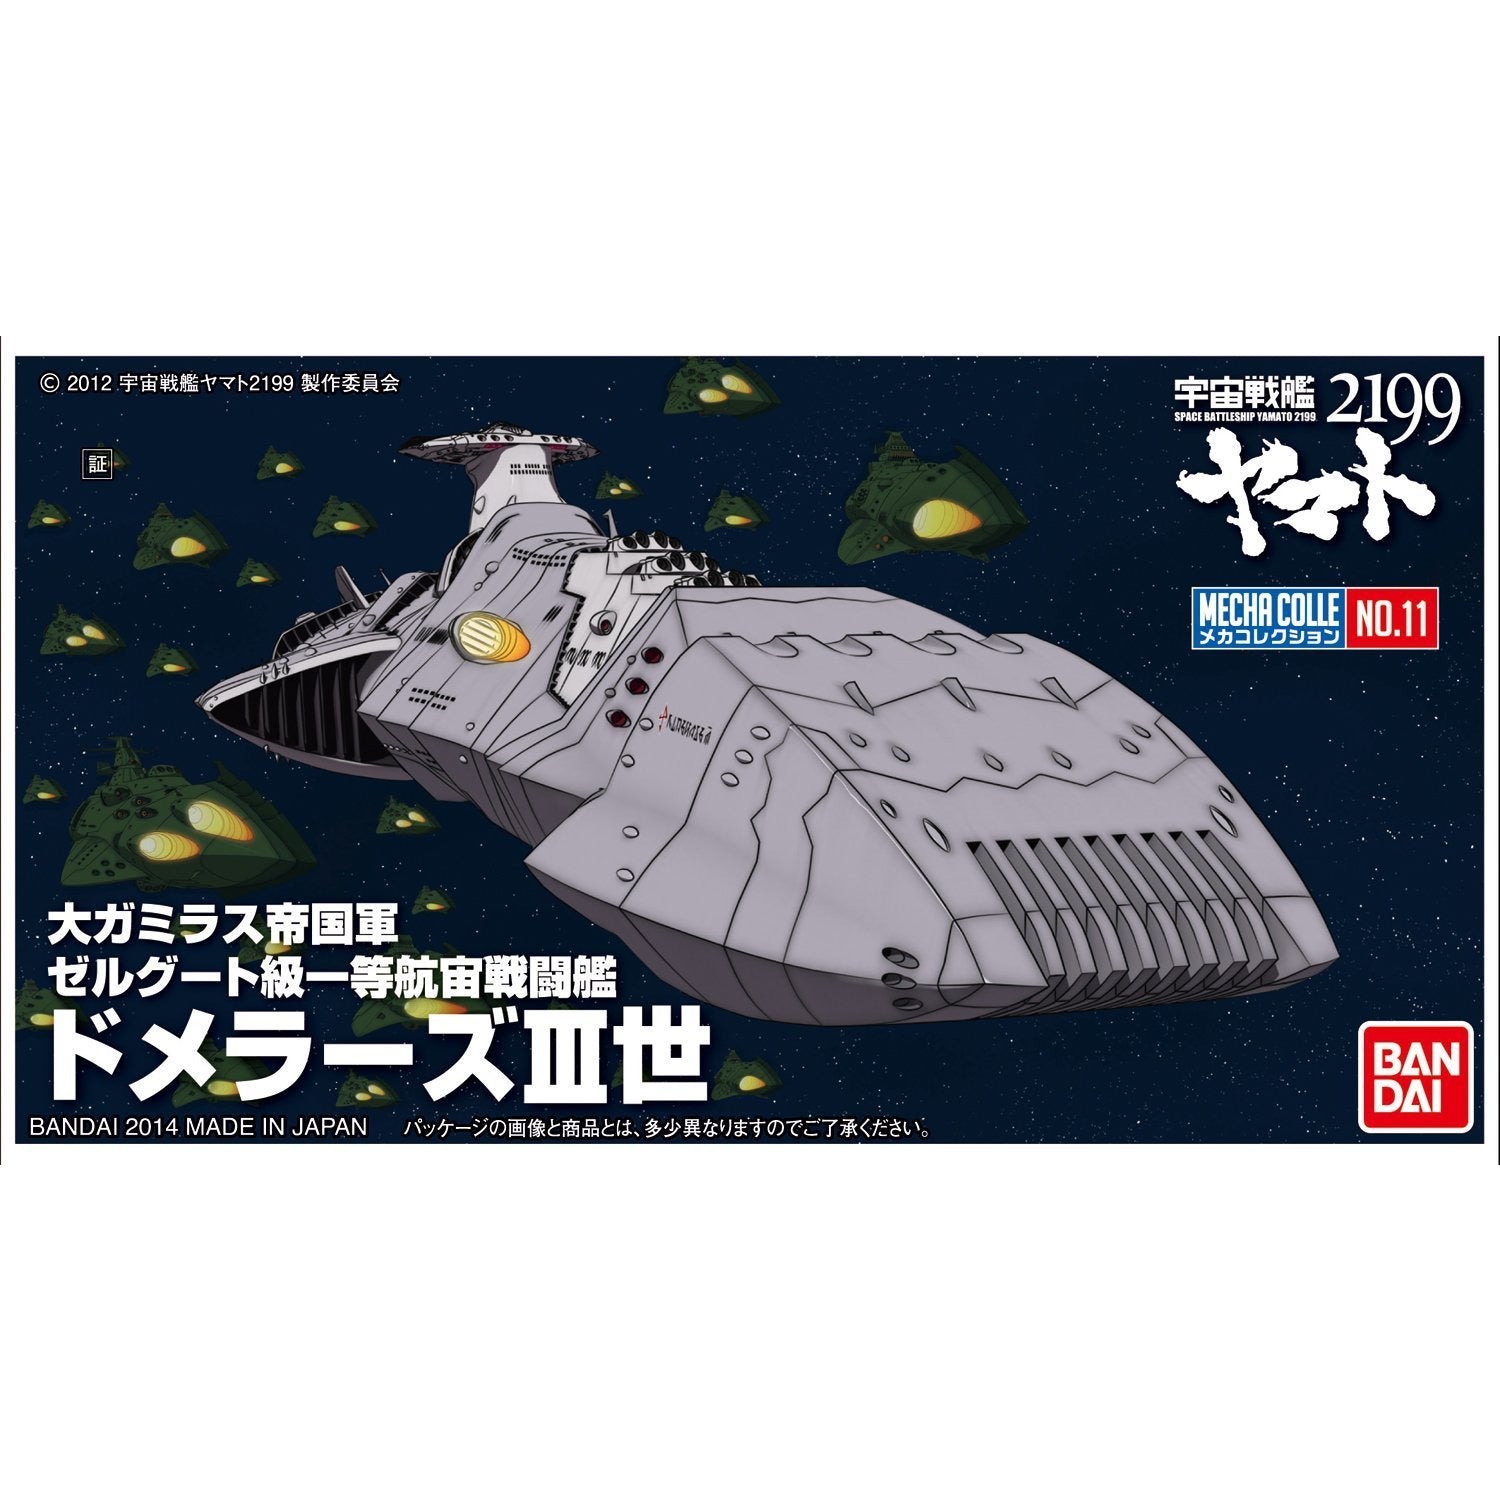 Domellers-III #11 Star Blazers Mecha Collection #0193831 Space Battleship Yamato 2199 by Bandai